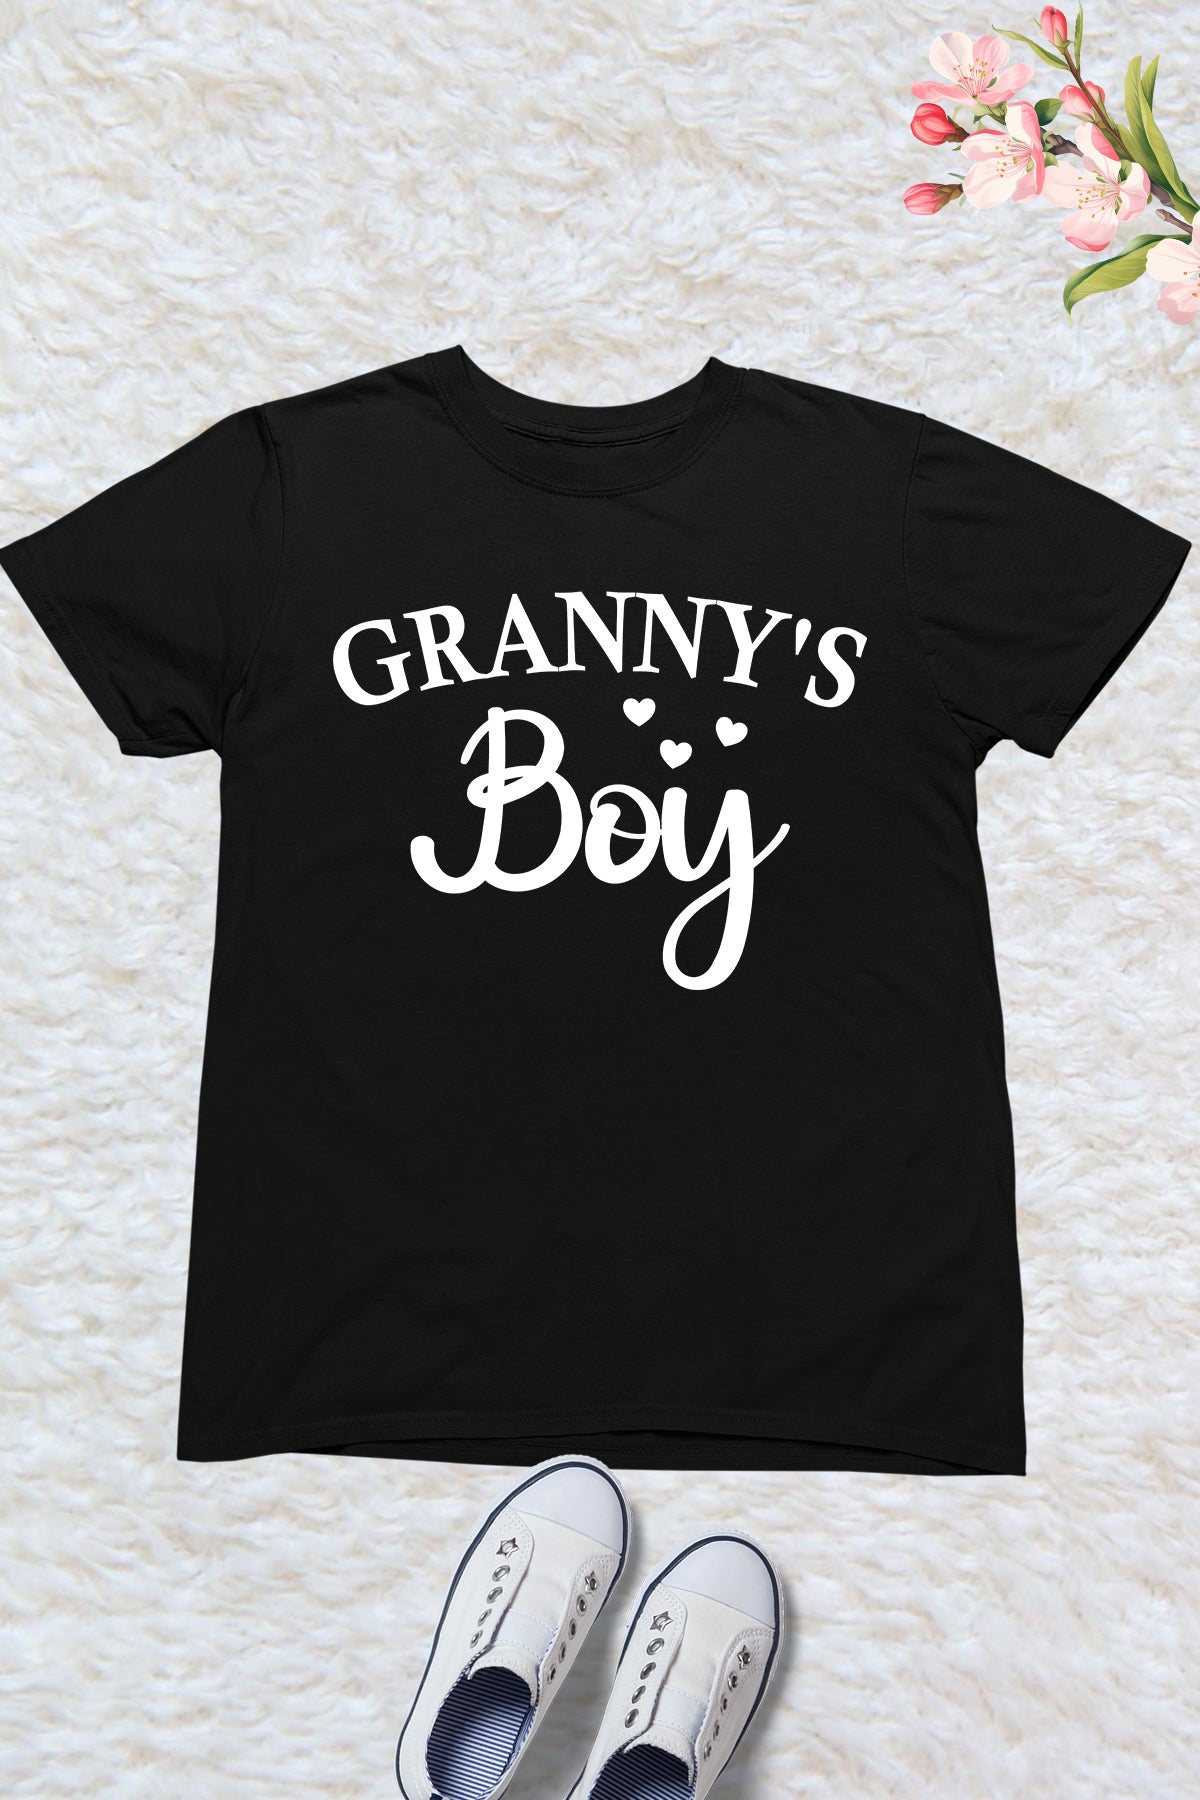 Granny's Boy T Shirt